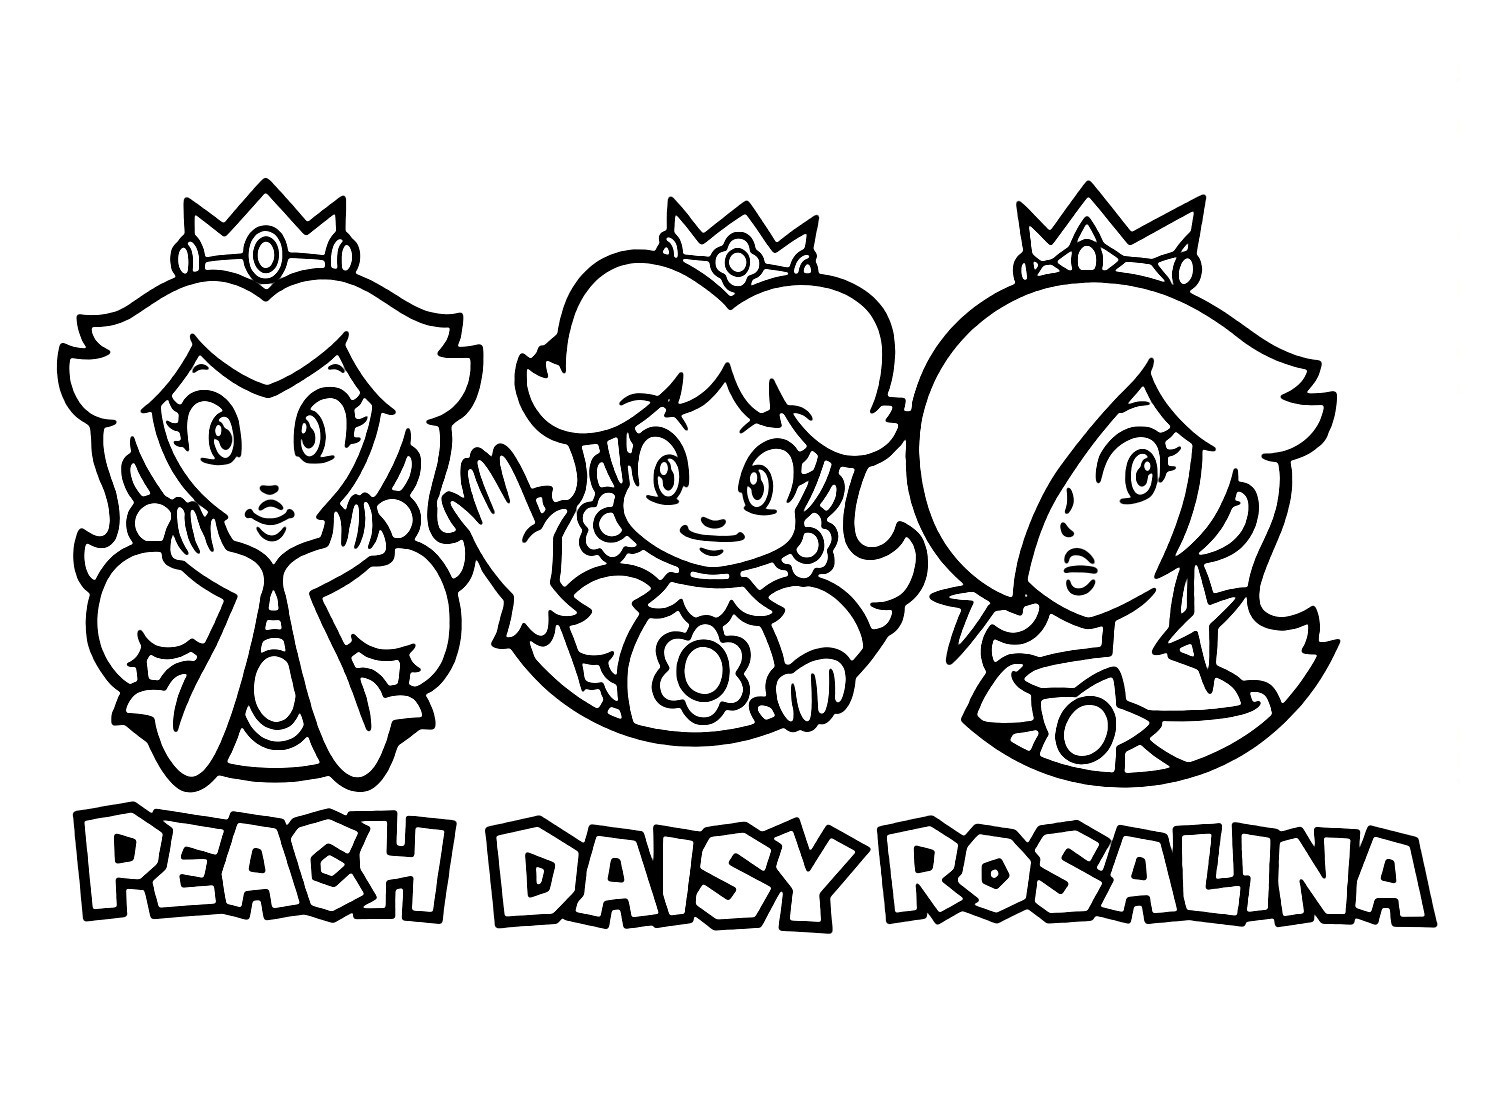 Princesse Peach, Daisy, Rosalina de Princess Daisy